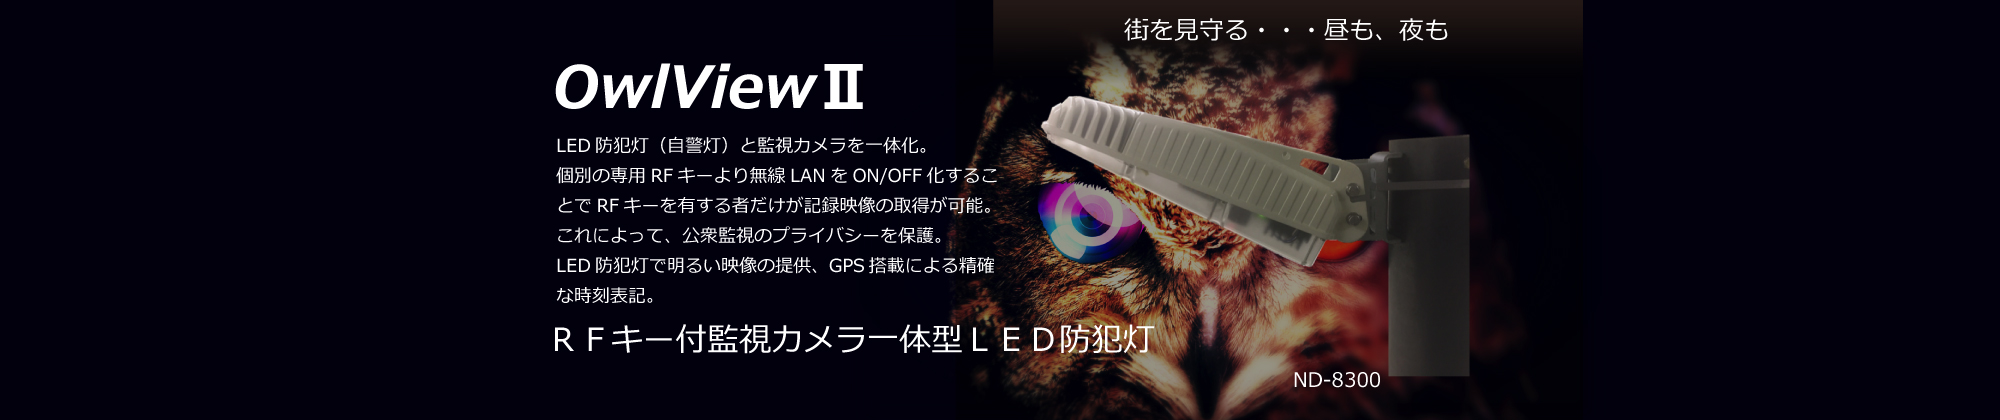 OwlView2 カメラ付き防犯灯：LED防犯灯（自警灯）と監視カメラを一体化。LED防犯灯で明るい映像の提供、GPS搭載による精確な時刻表記により、犯罪捜査に活用可能。